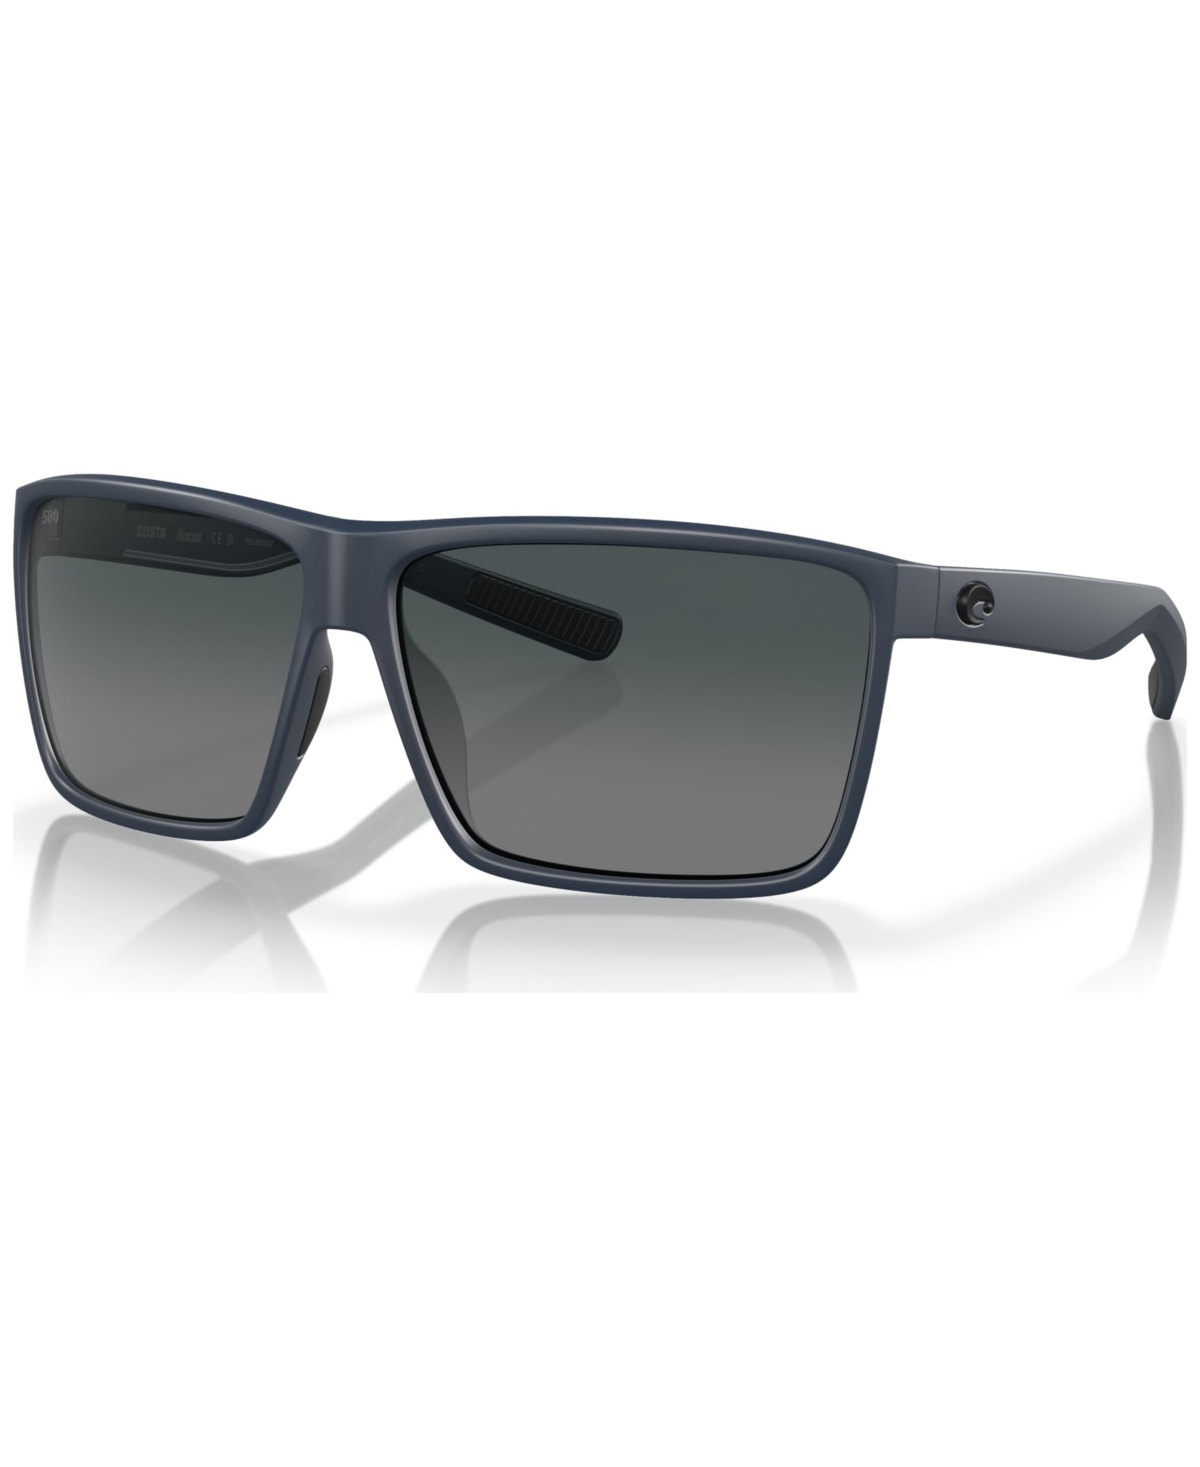 Men's Rincon Polarized Sunglasses, Gradient 6S9018 - Midnight Blue